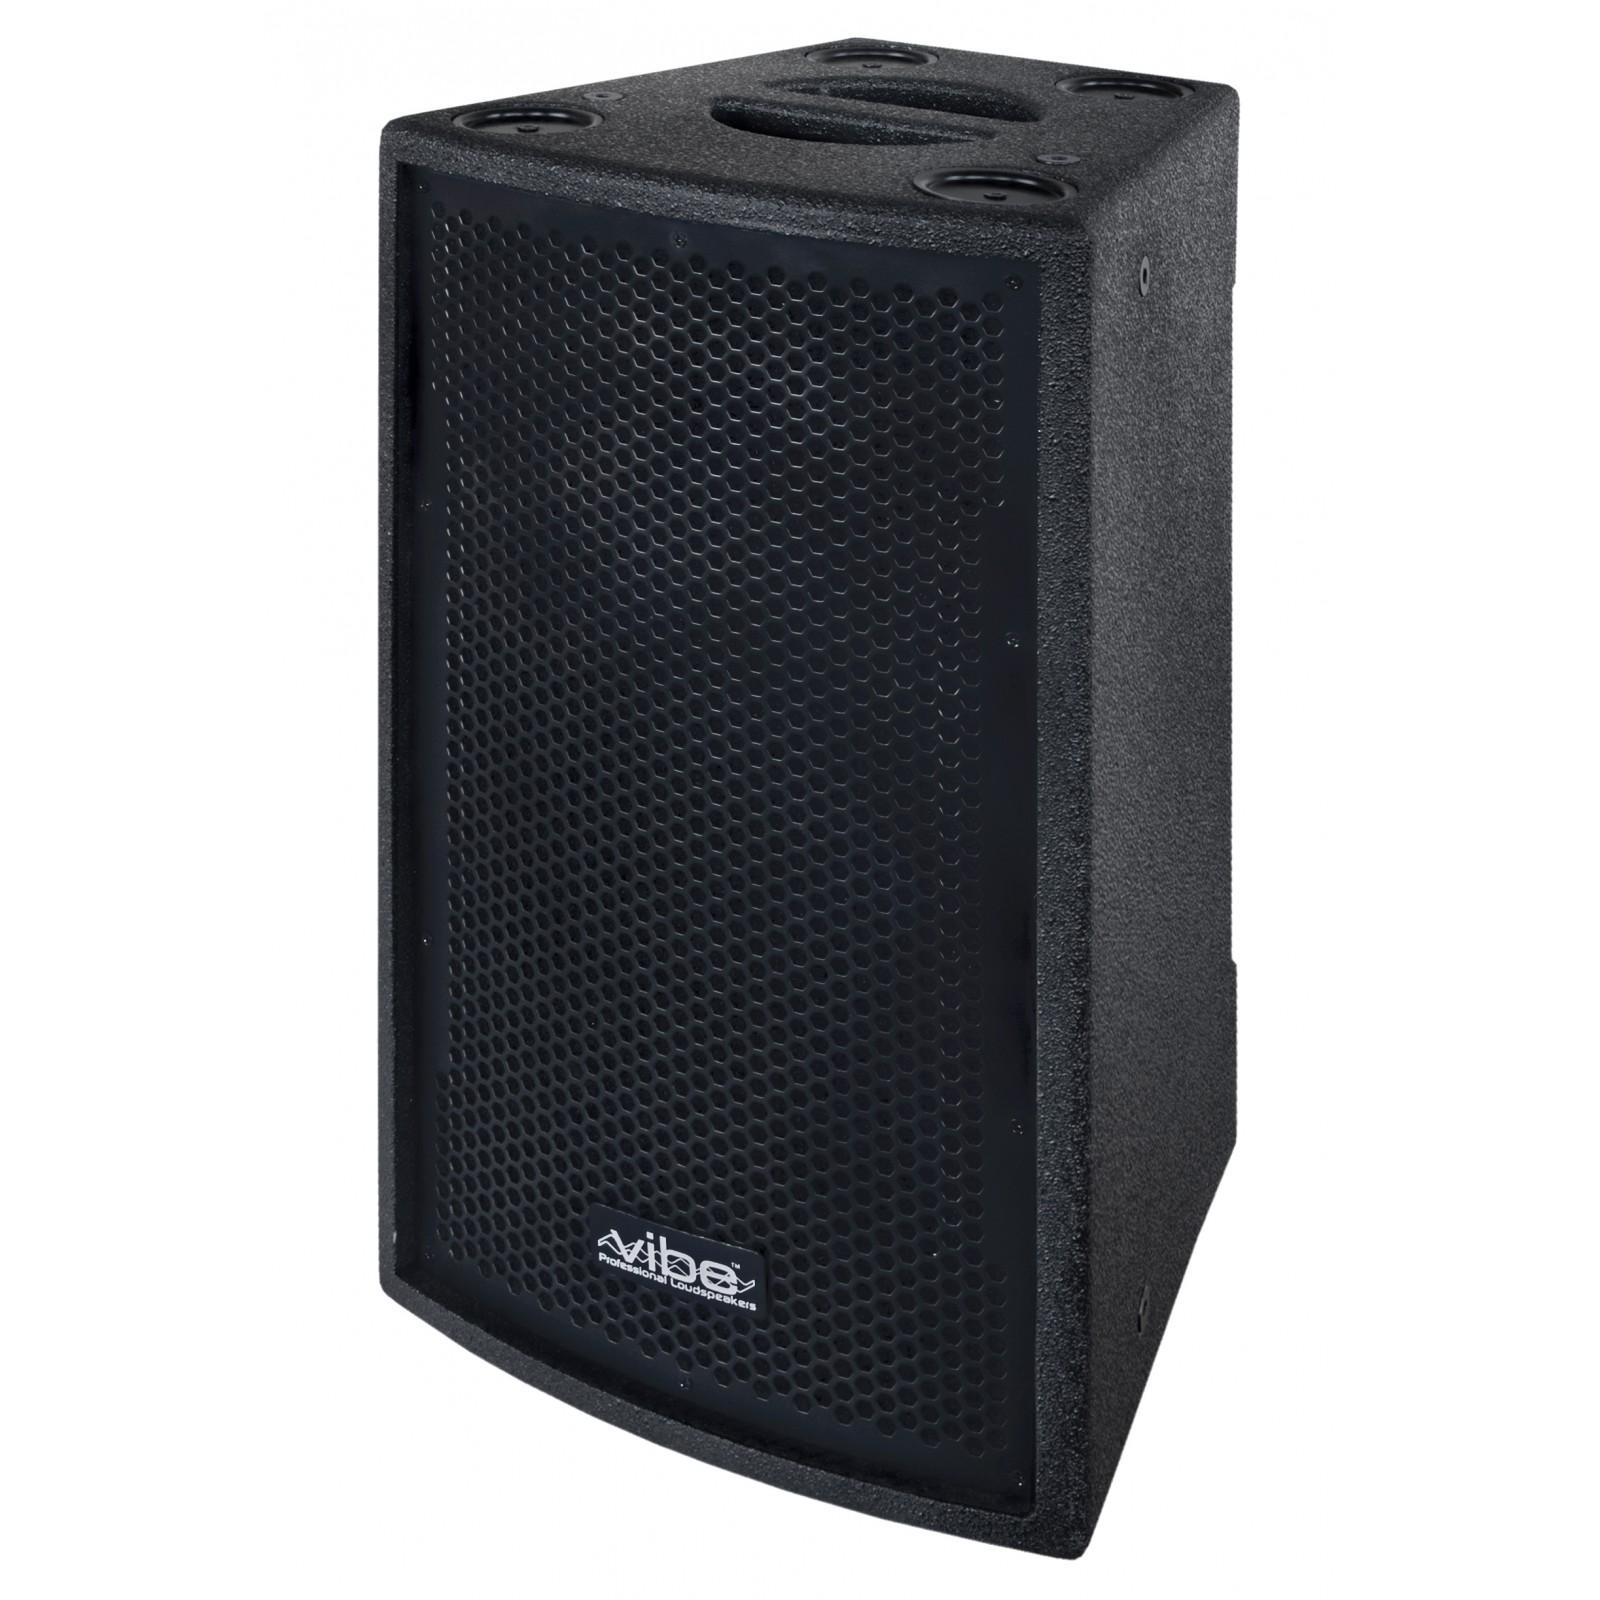 L Acoustics k1. Woodstock Speaker System Optimus-200mk. II. Звукоусилитель. Vibe 8".